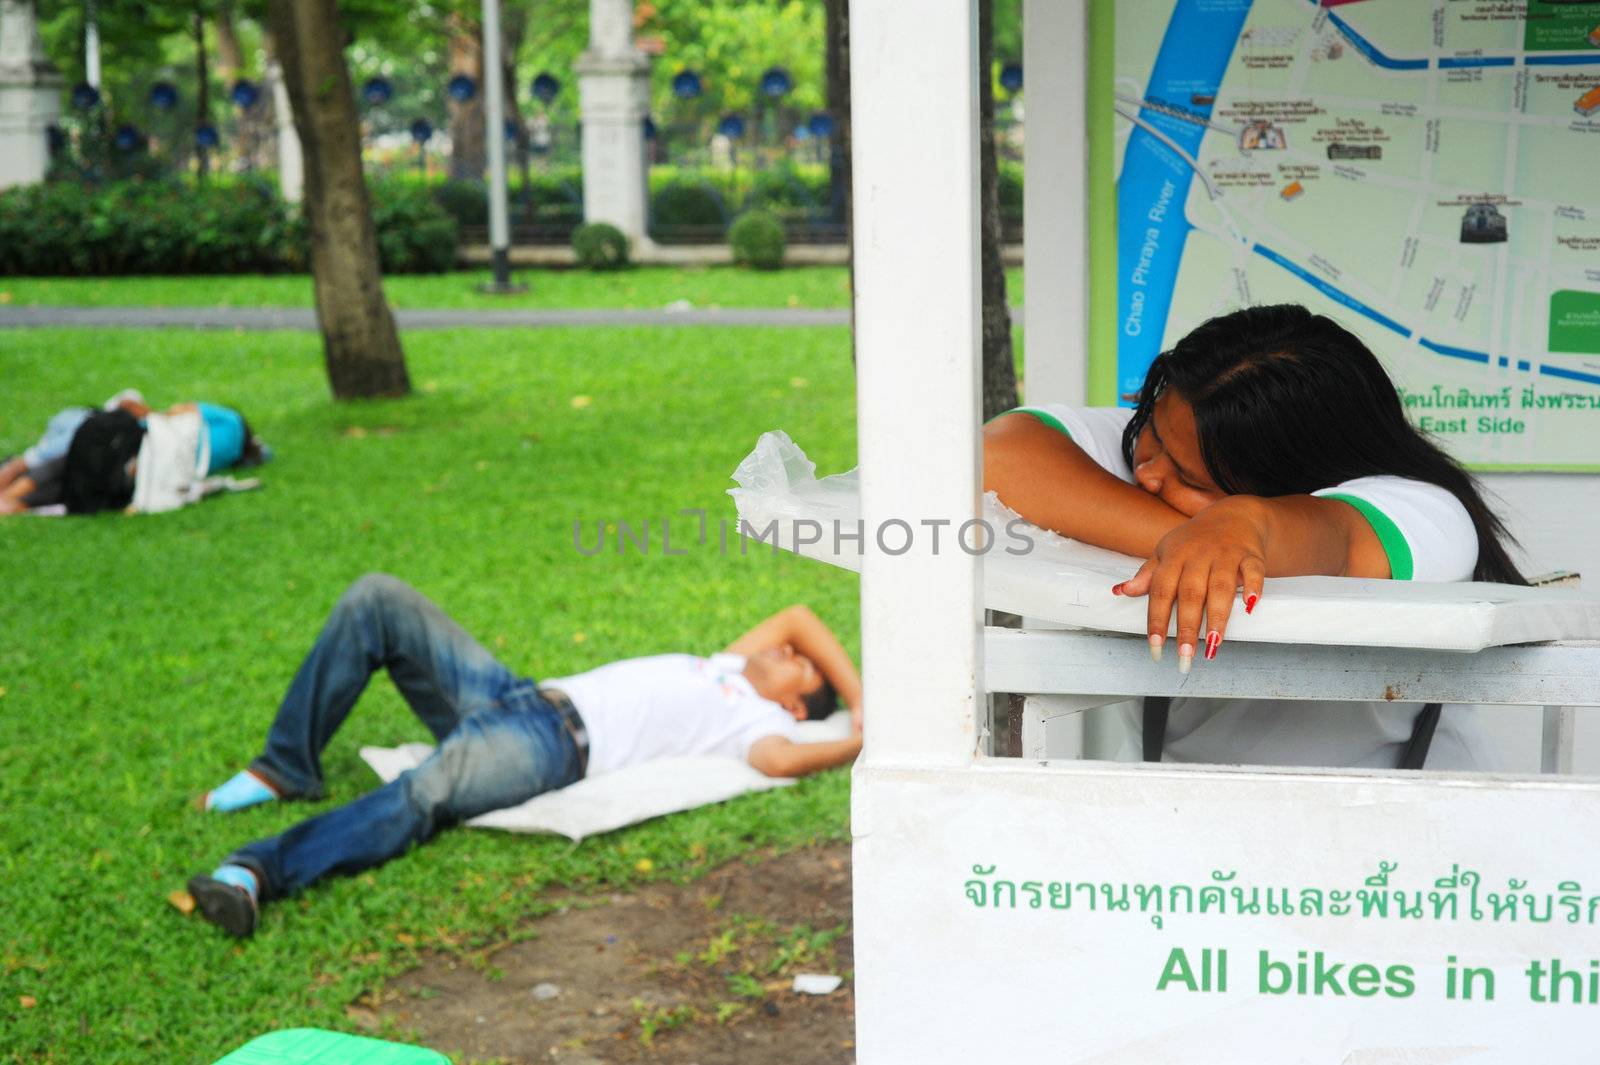 Sleeping in Bangkok by joyfull